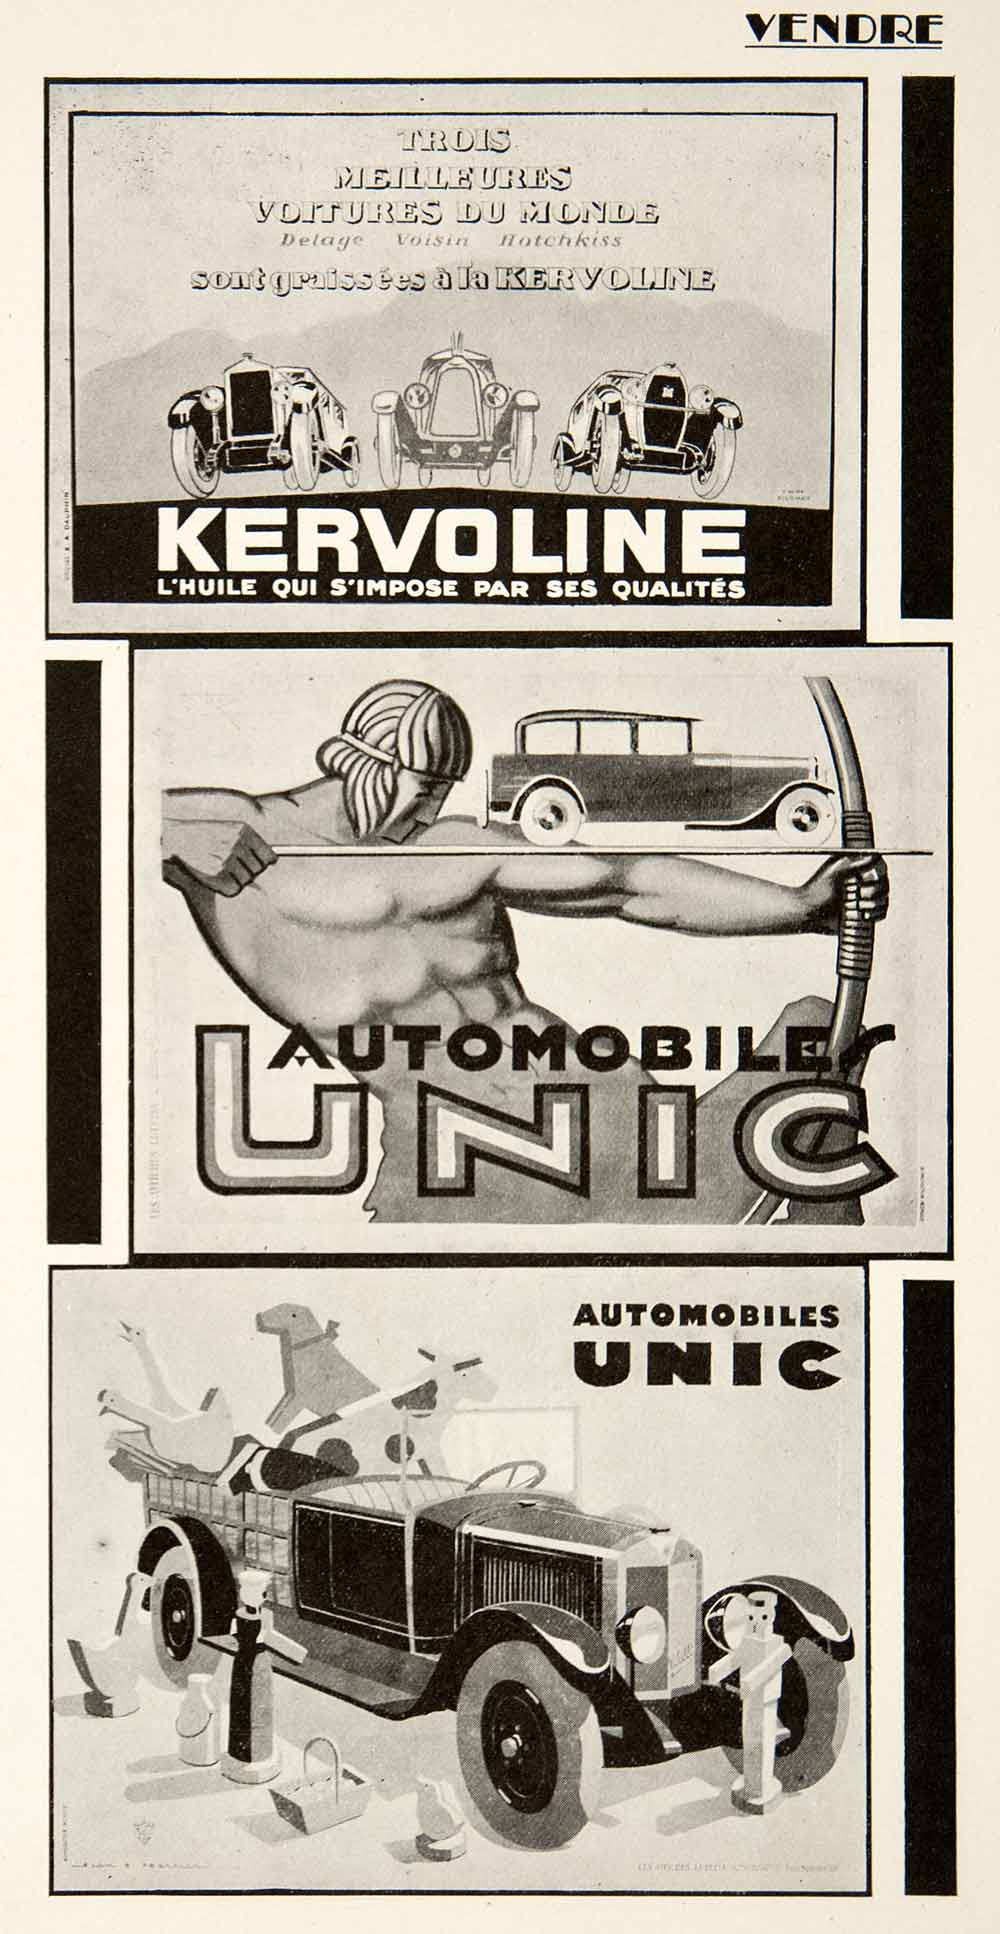 1928 Print Art Deco French Ad Graphic Design Automobiles UNIC Car Kervoline VEN5